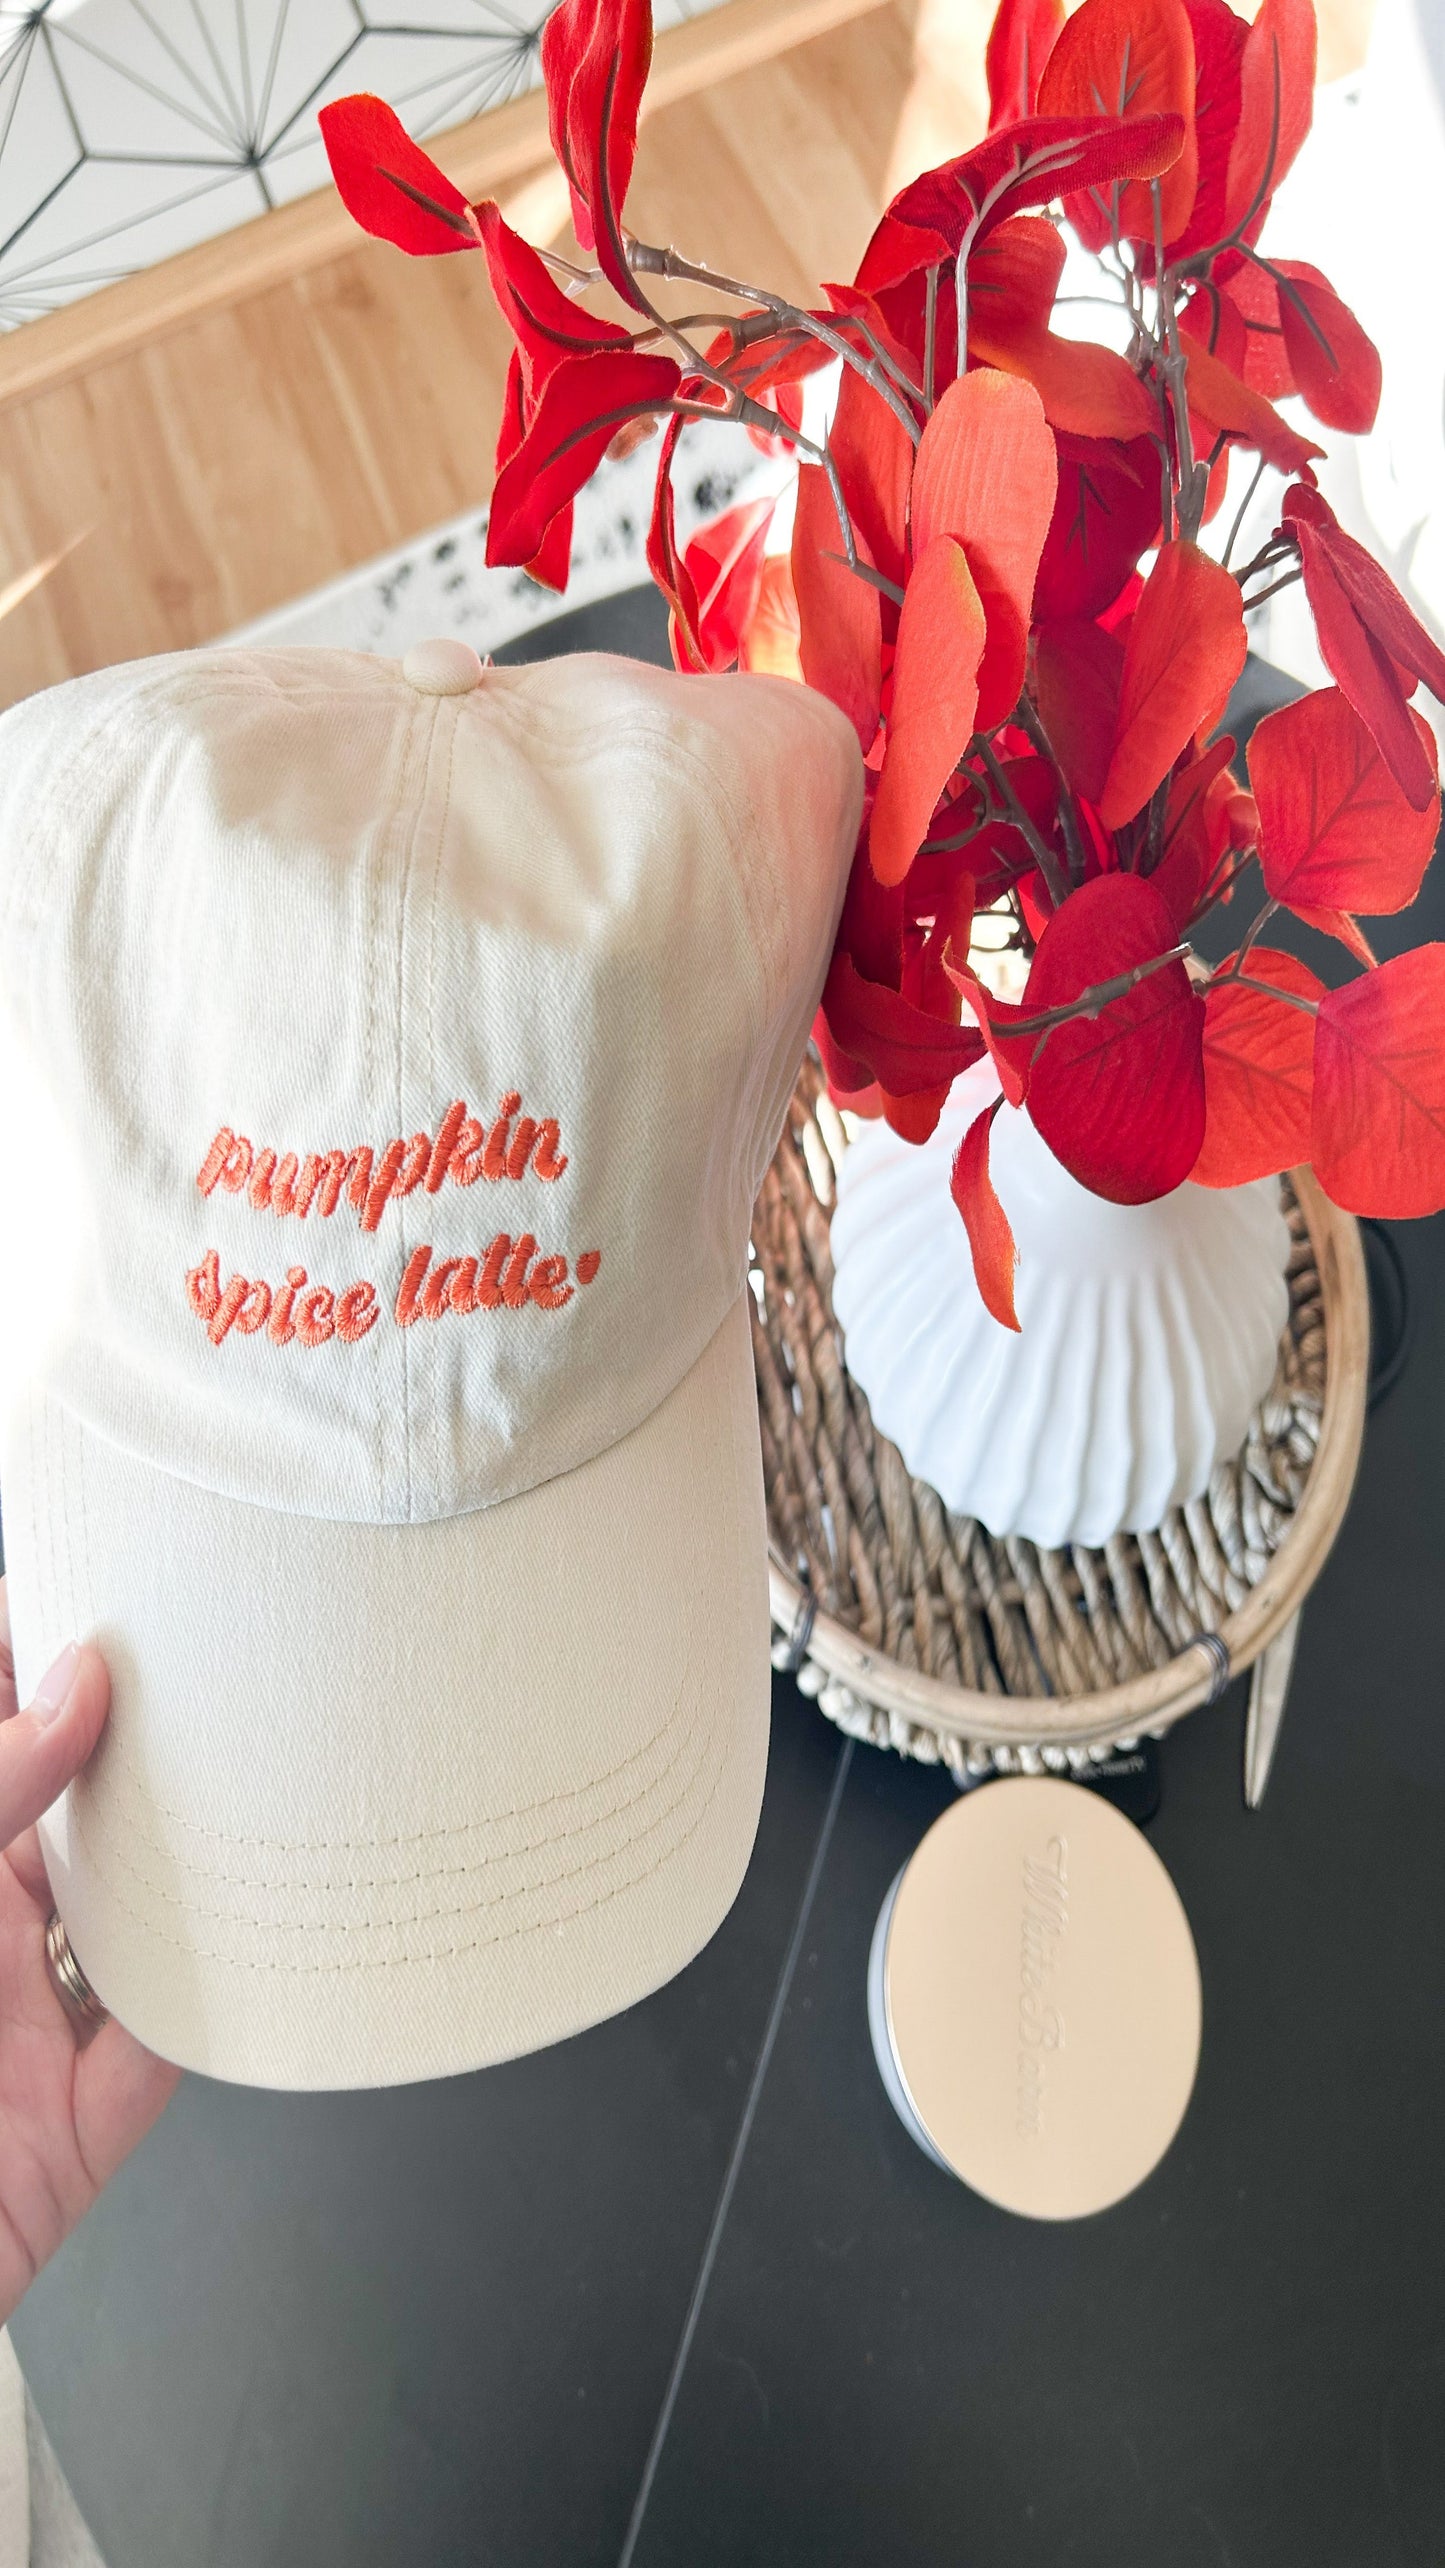 Pumpkin Spice Latte Hat - Beige